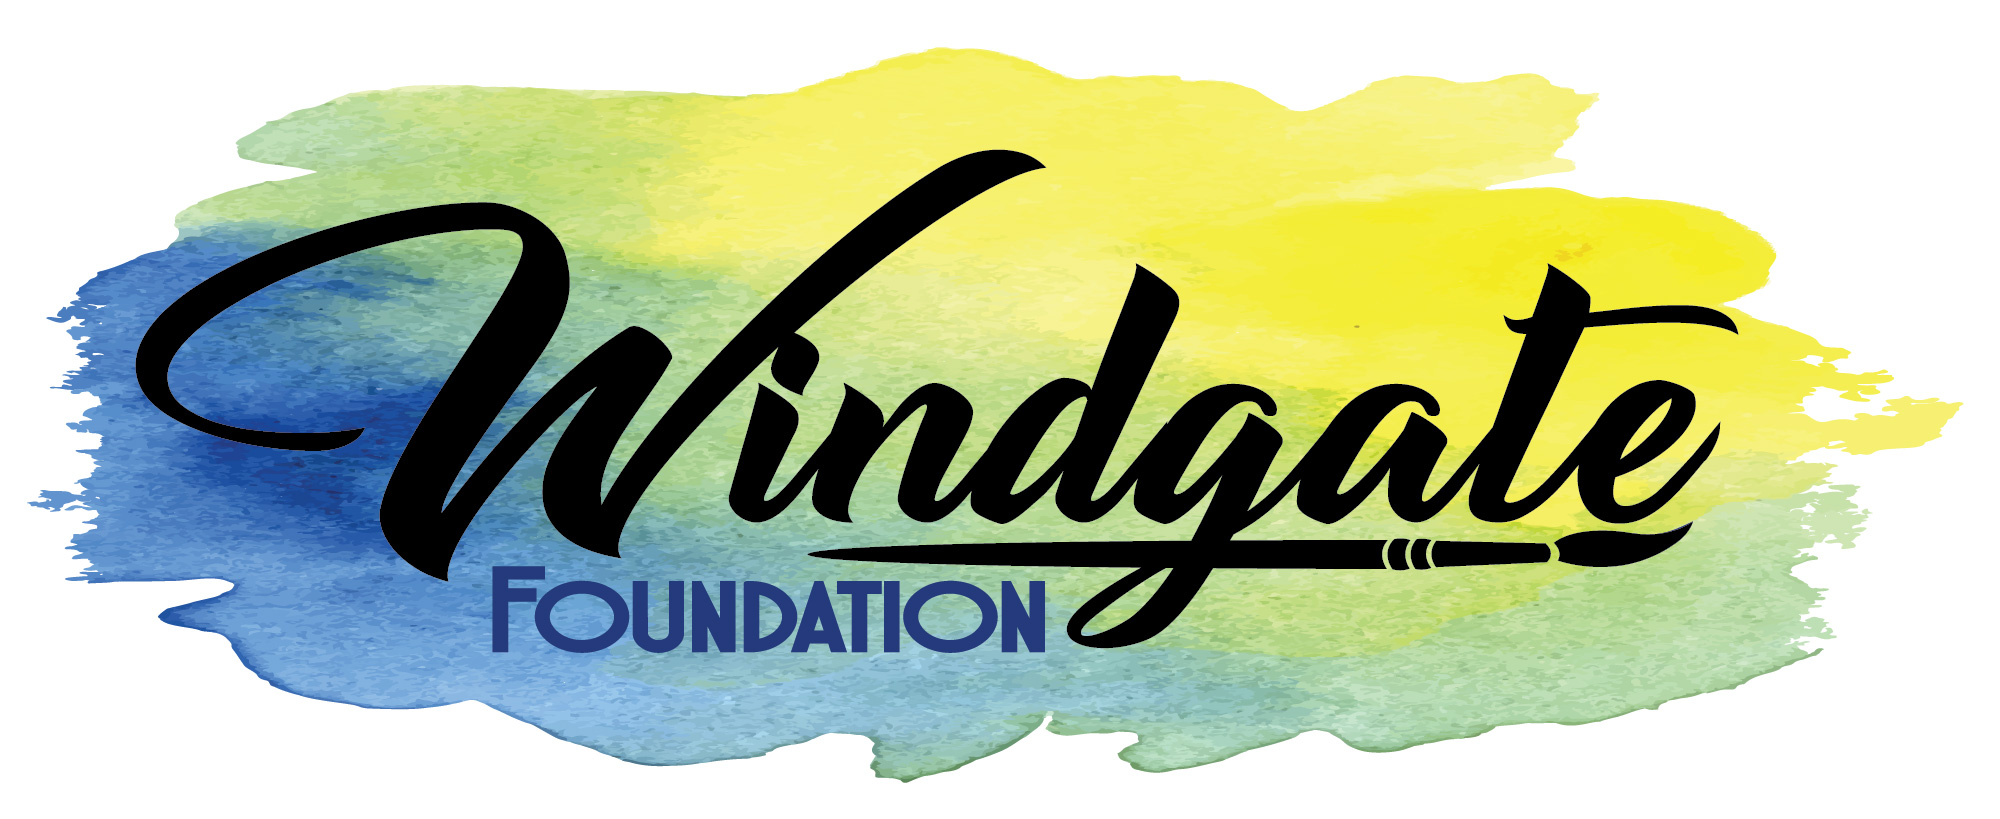 Windgate logo.